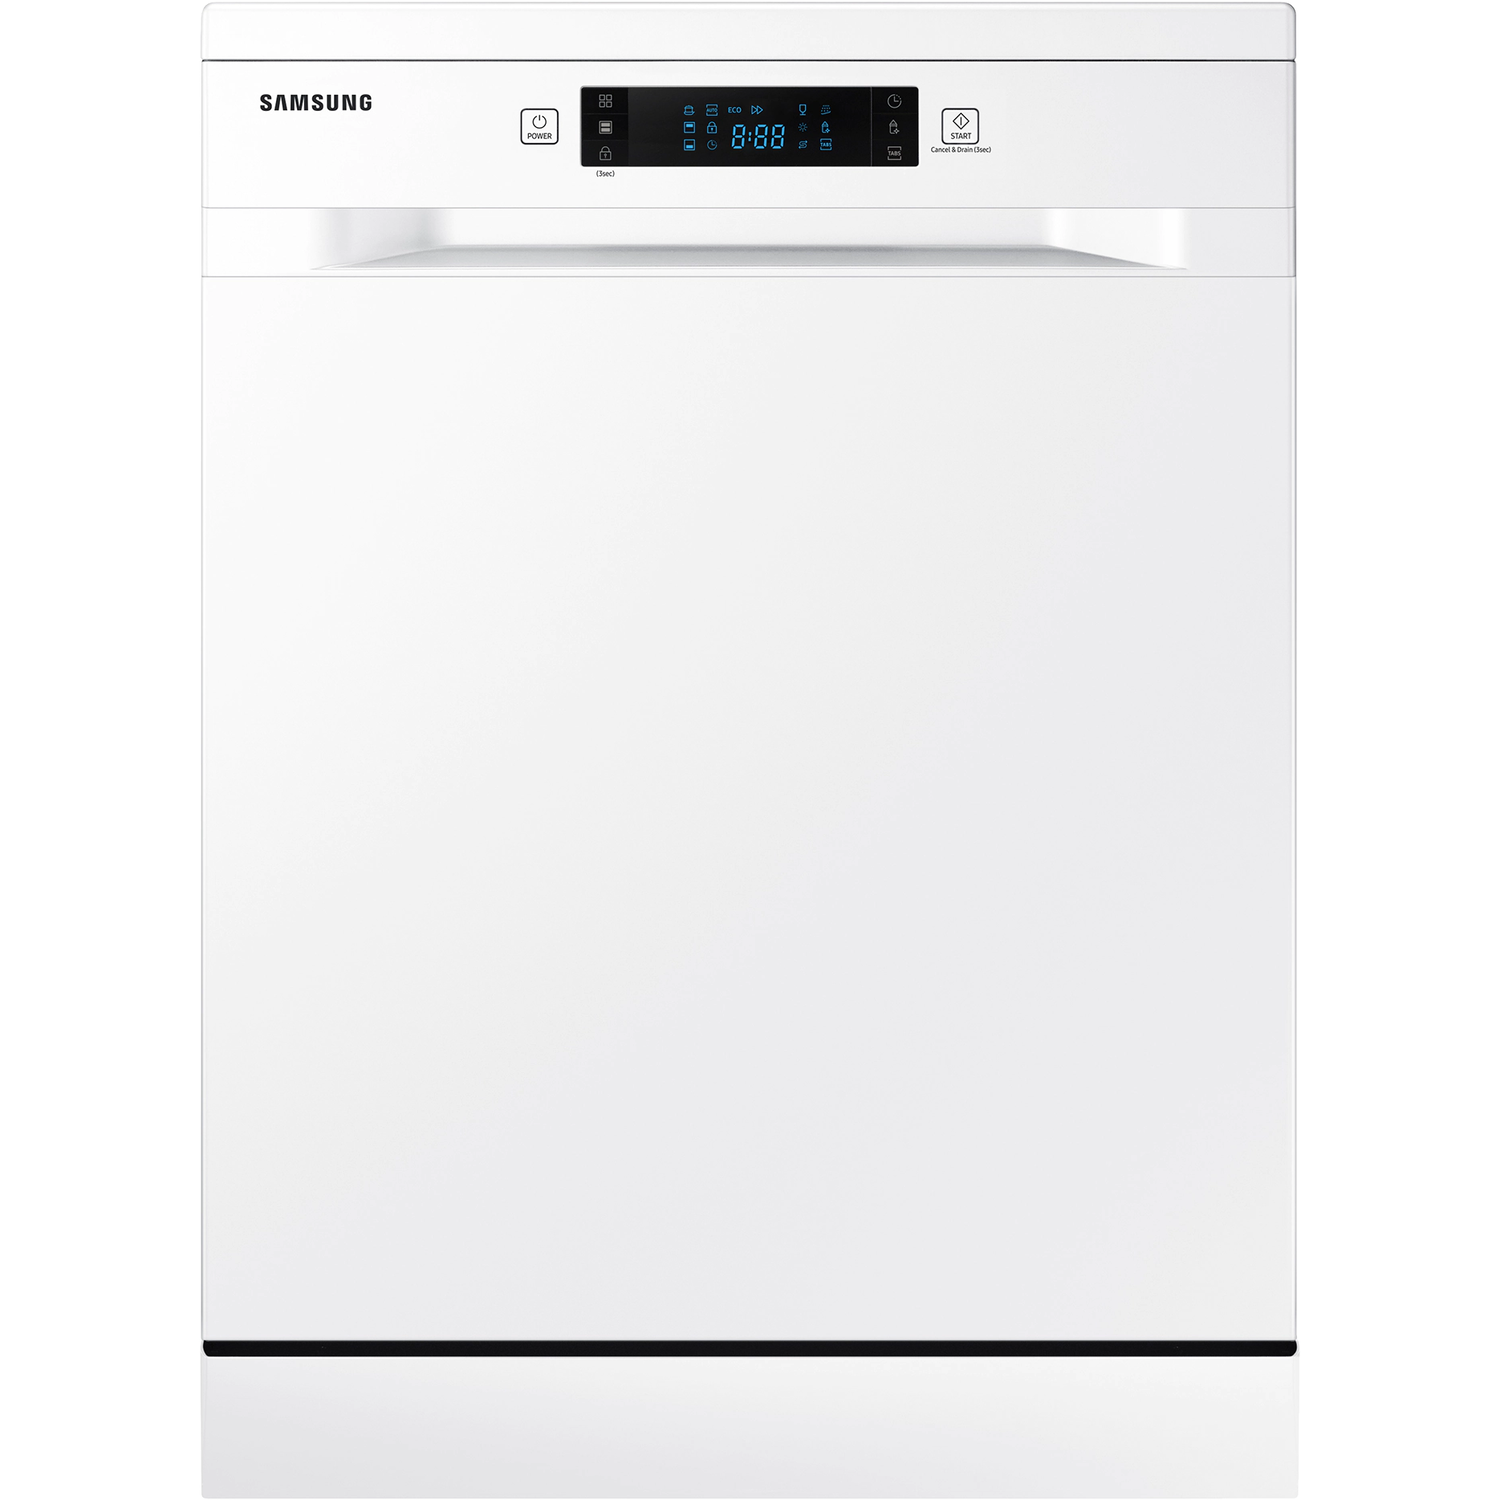 Refurbished Samsung DW60M6040FW 14 Place Freestanding Dishwasher White